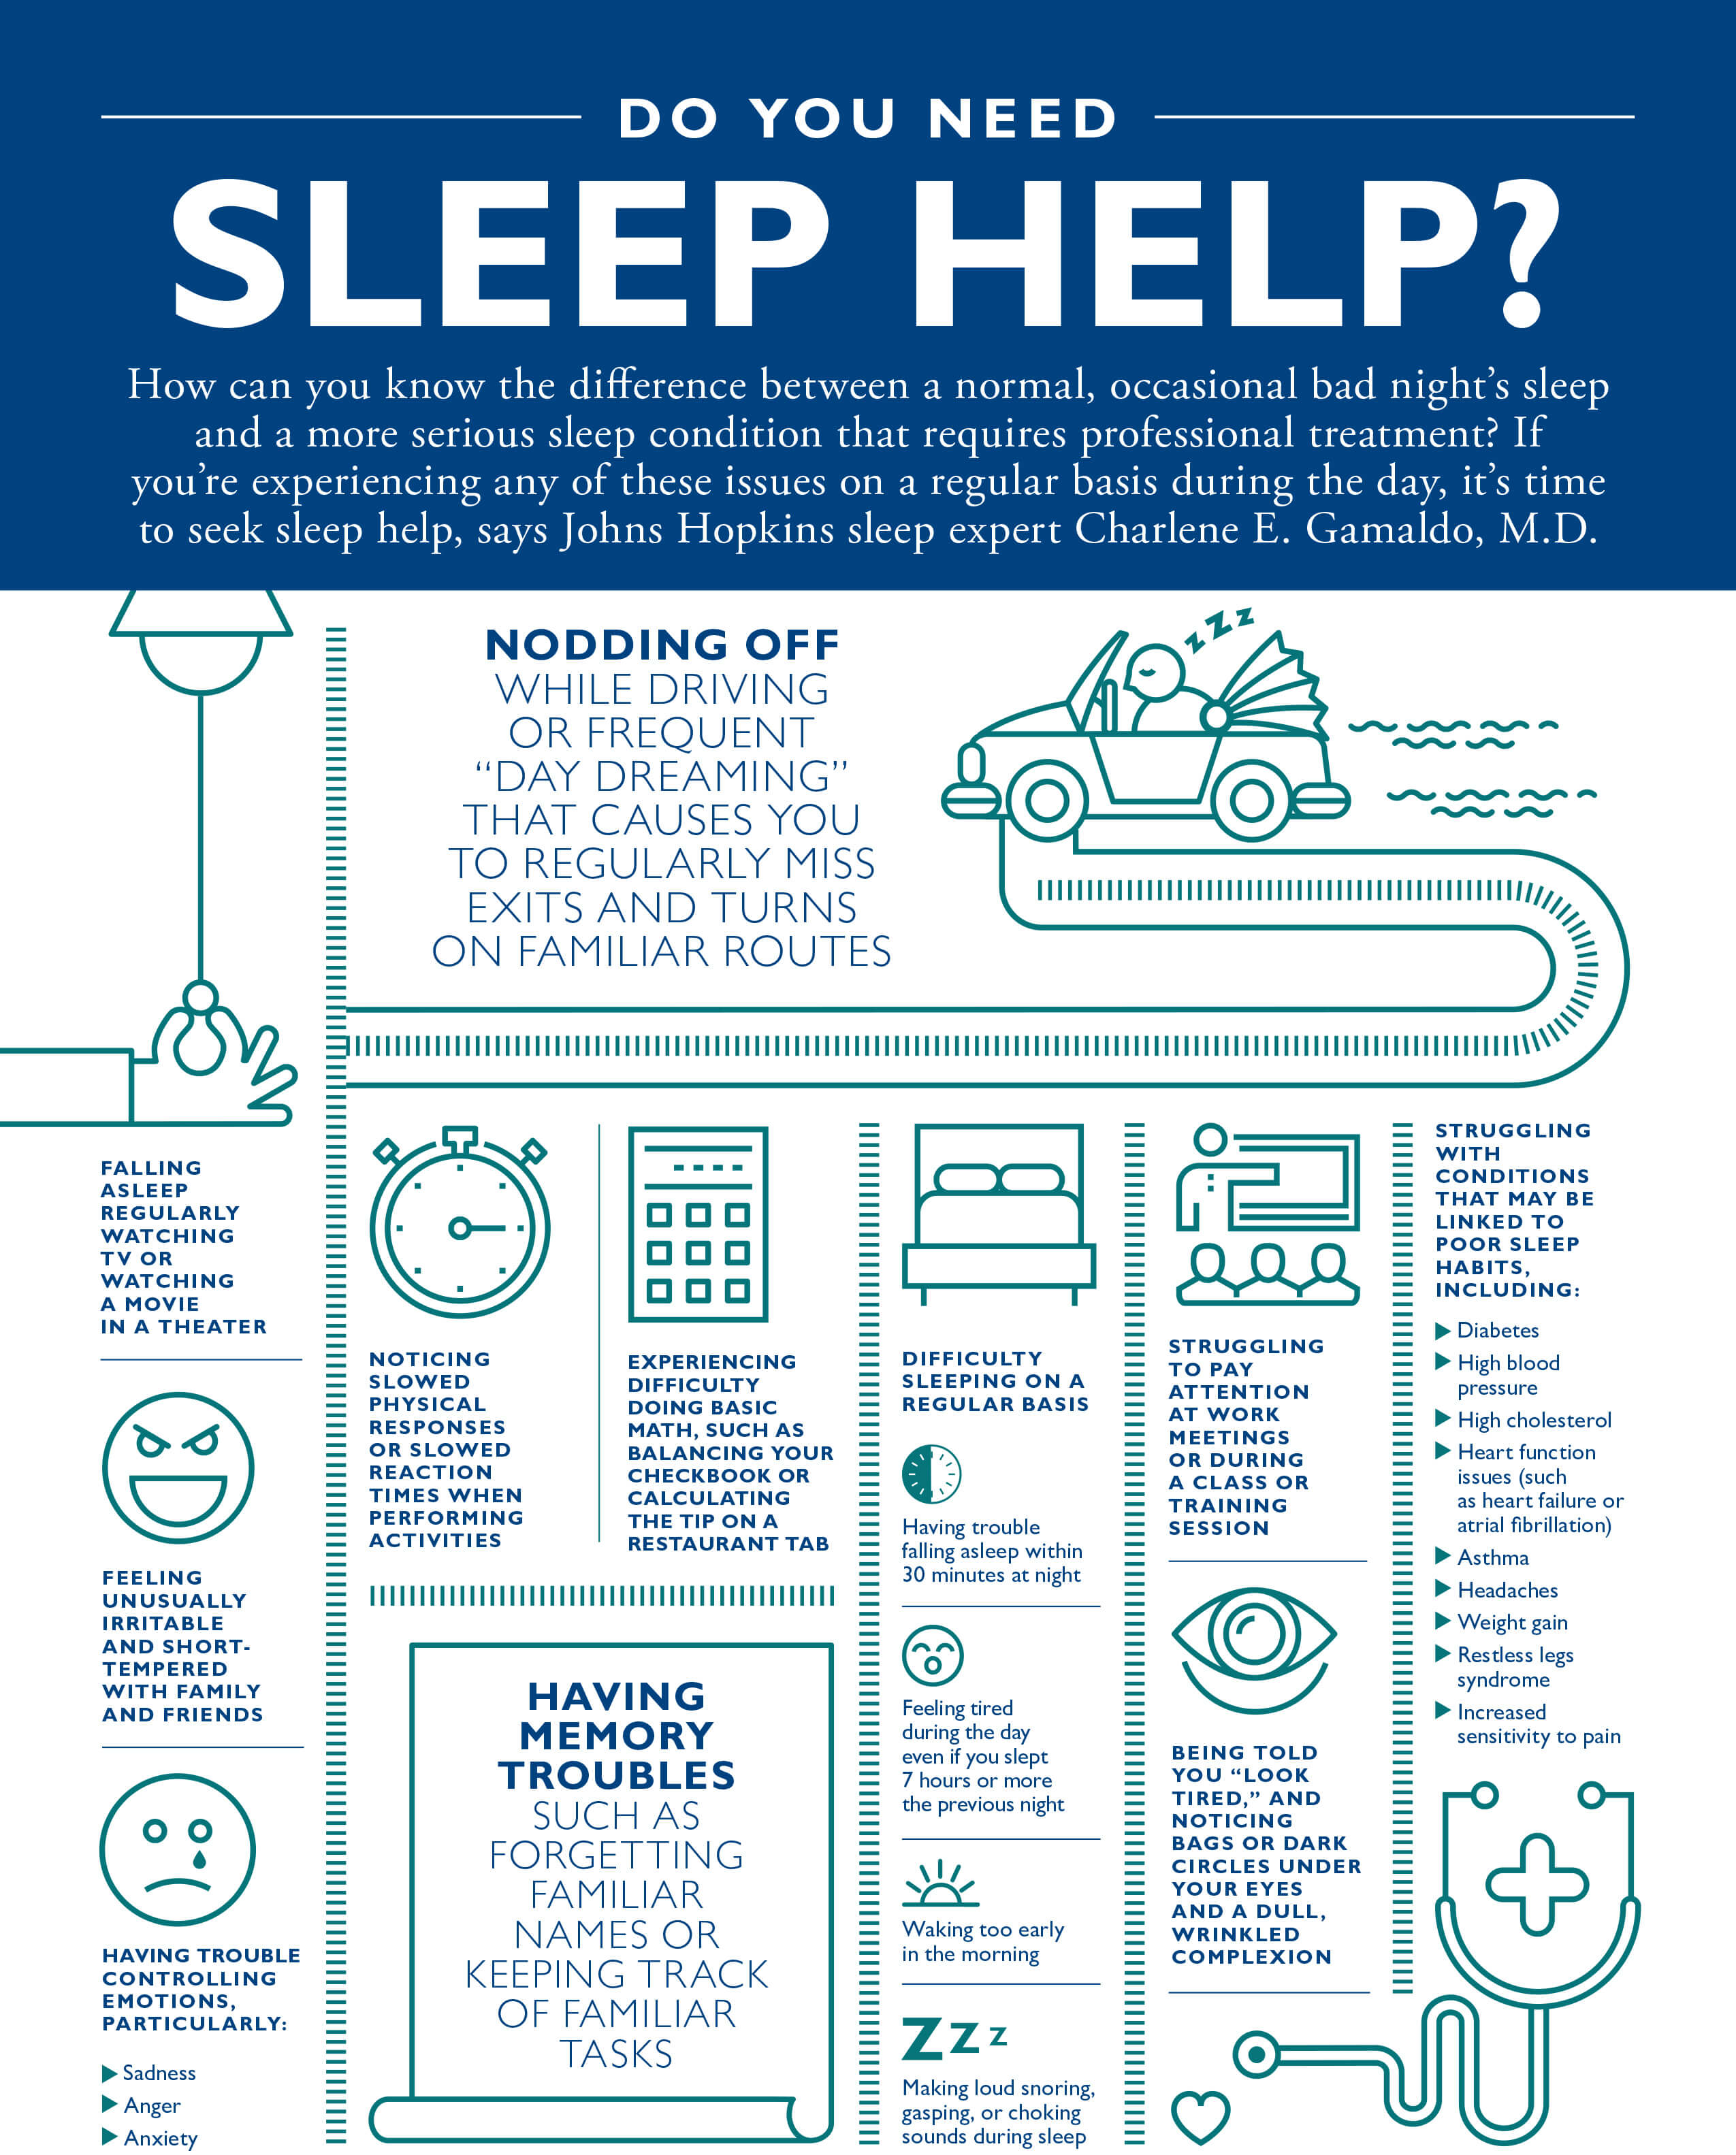 Sleep help infographic detailing various sleep issues